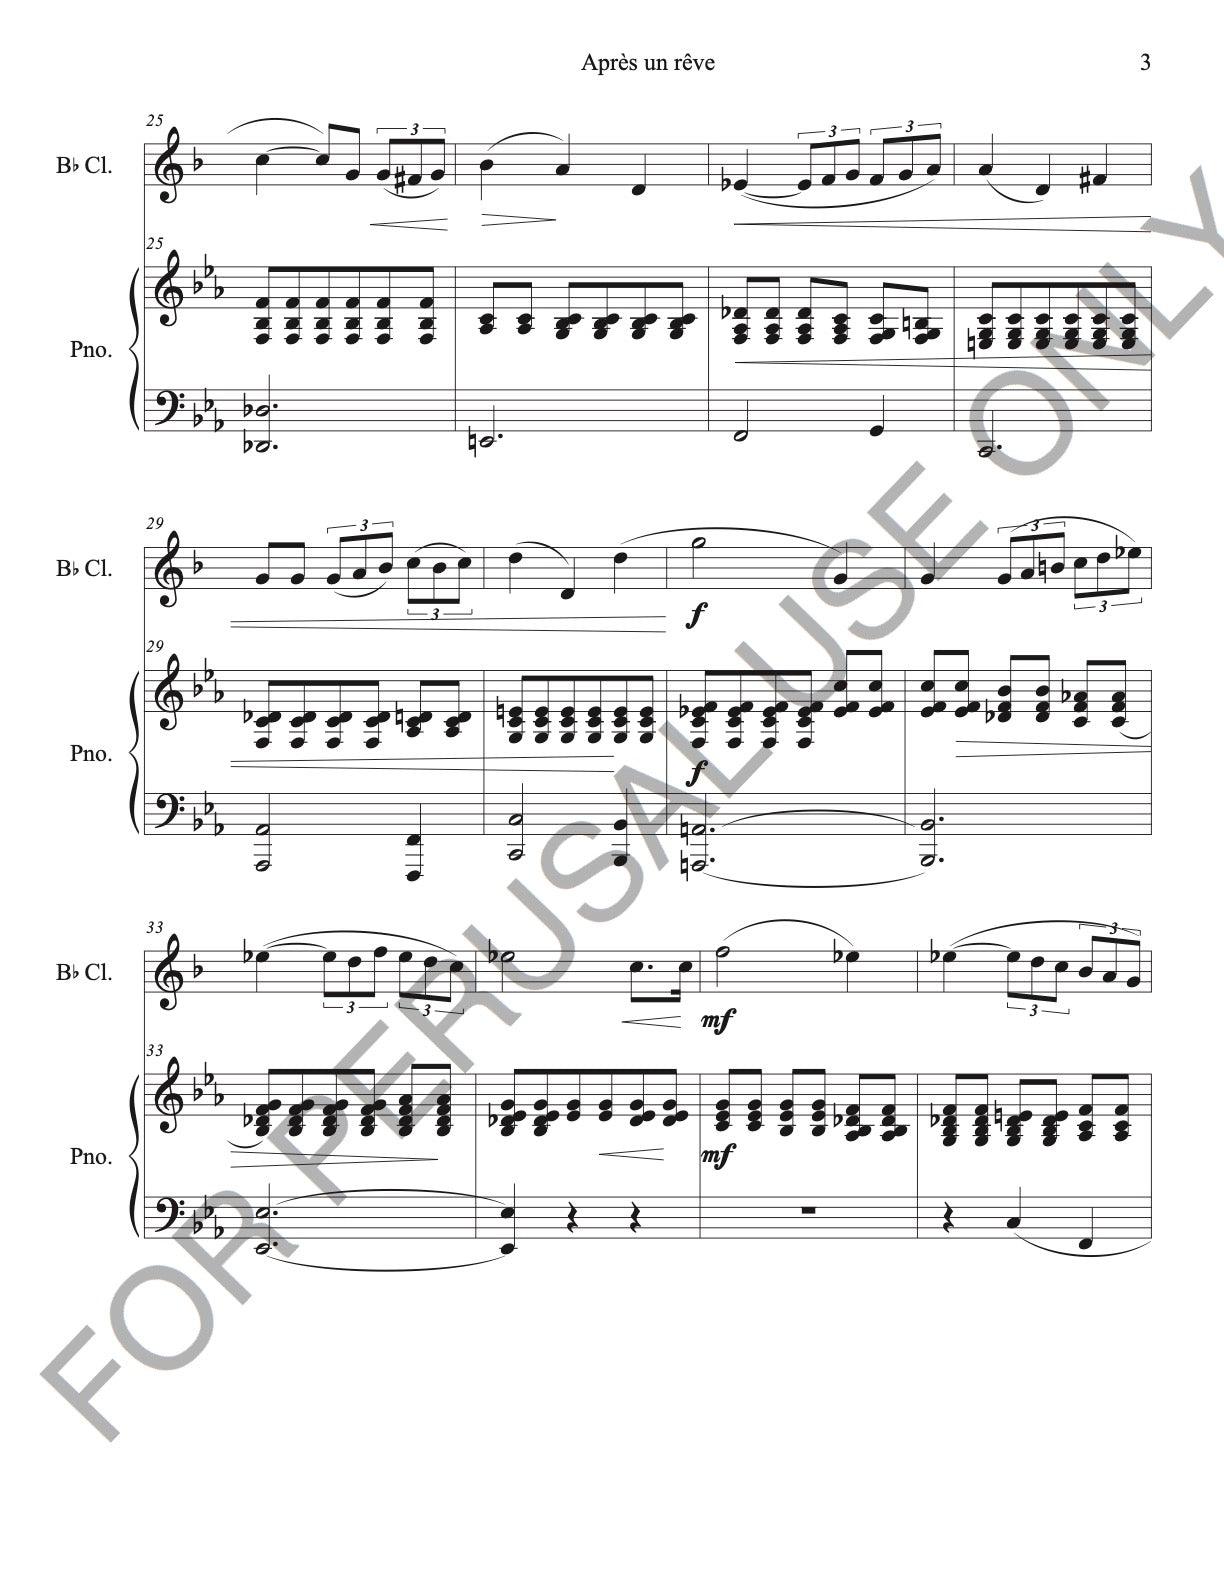 Bb Clarinet and Piano Sheet Music: Après un rêve by Faure (score+parts+mp3) - ChaipruckMekara